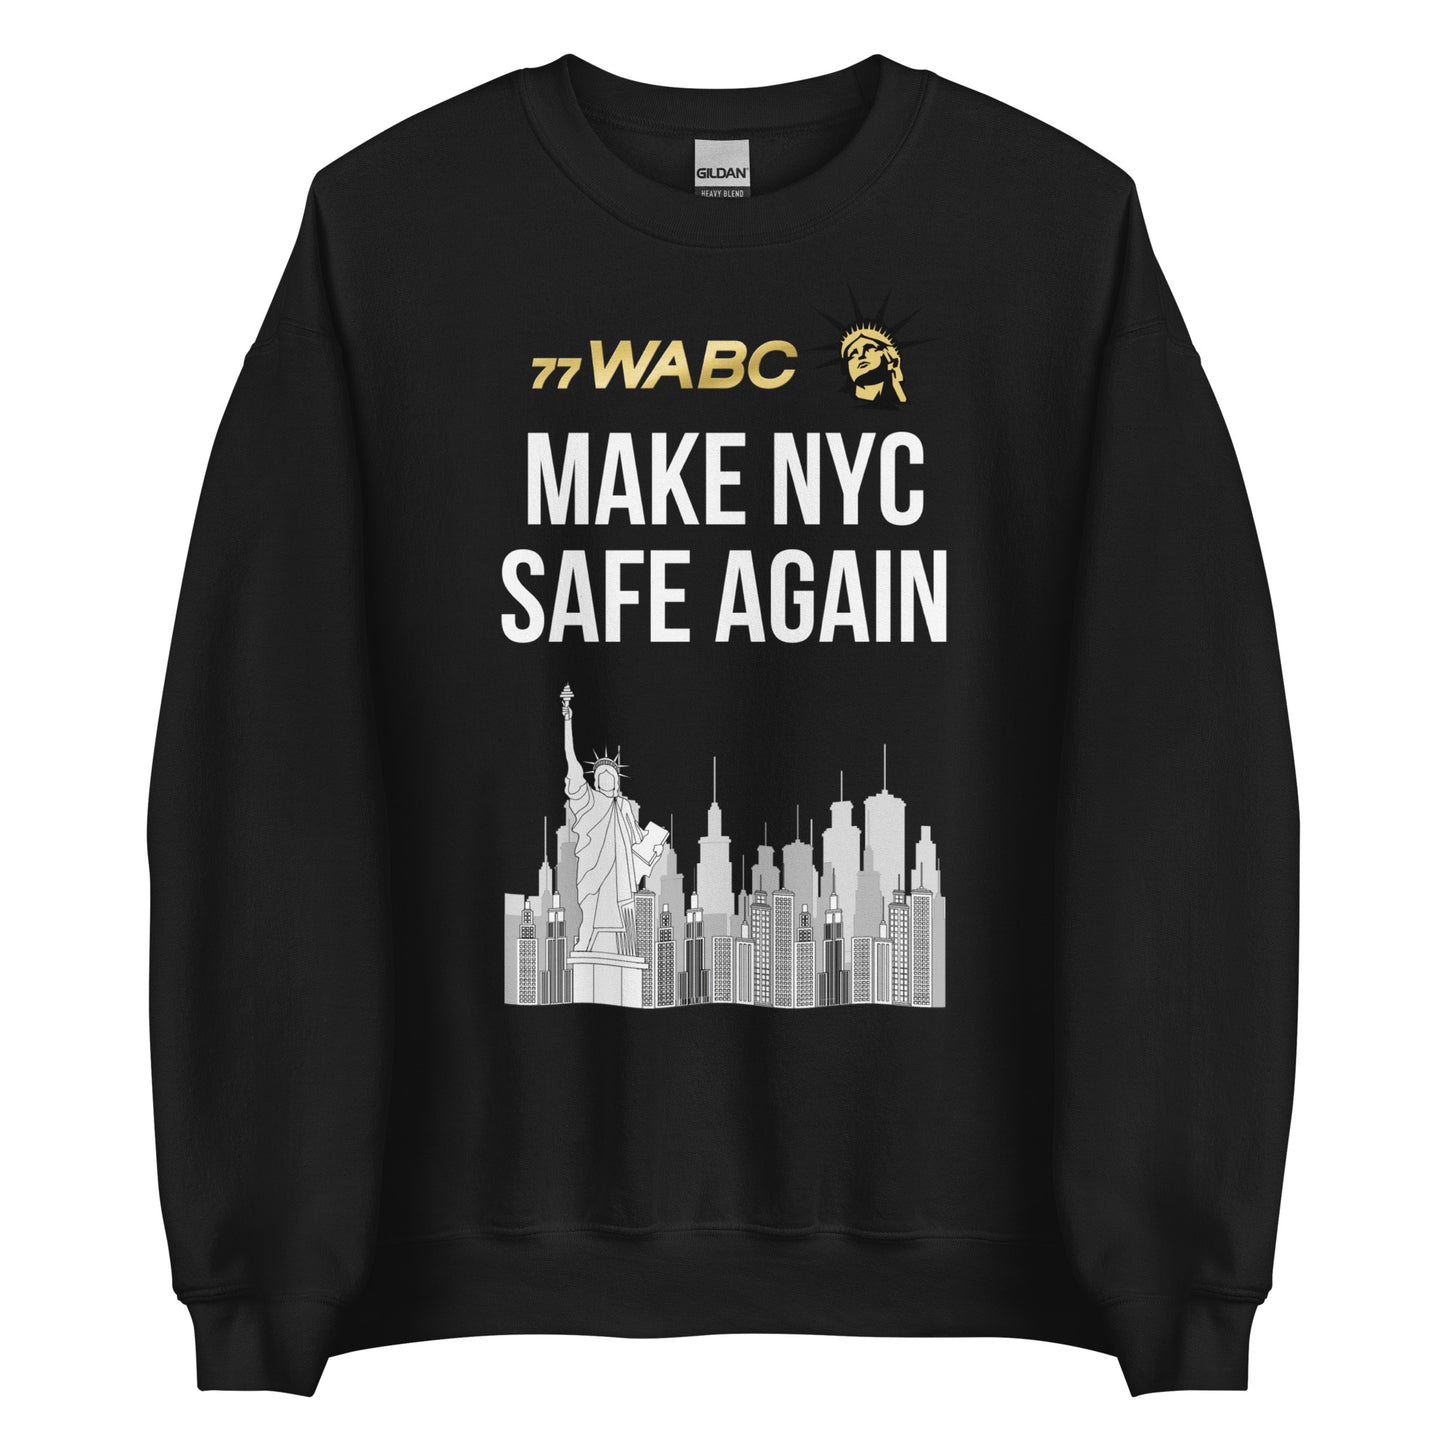 Make NYC Great Again Sweatshirt